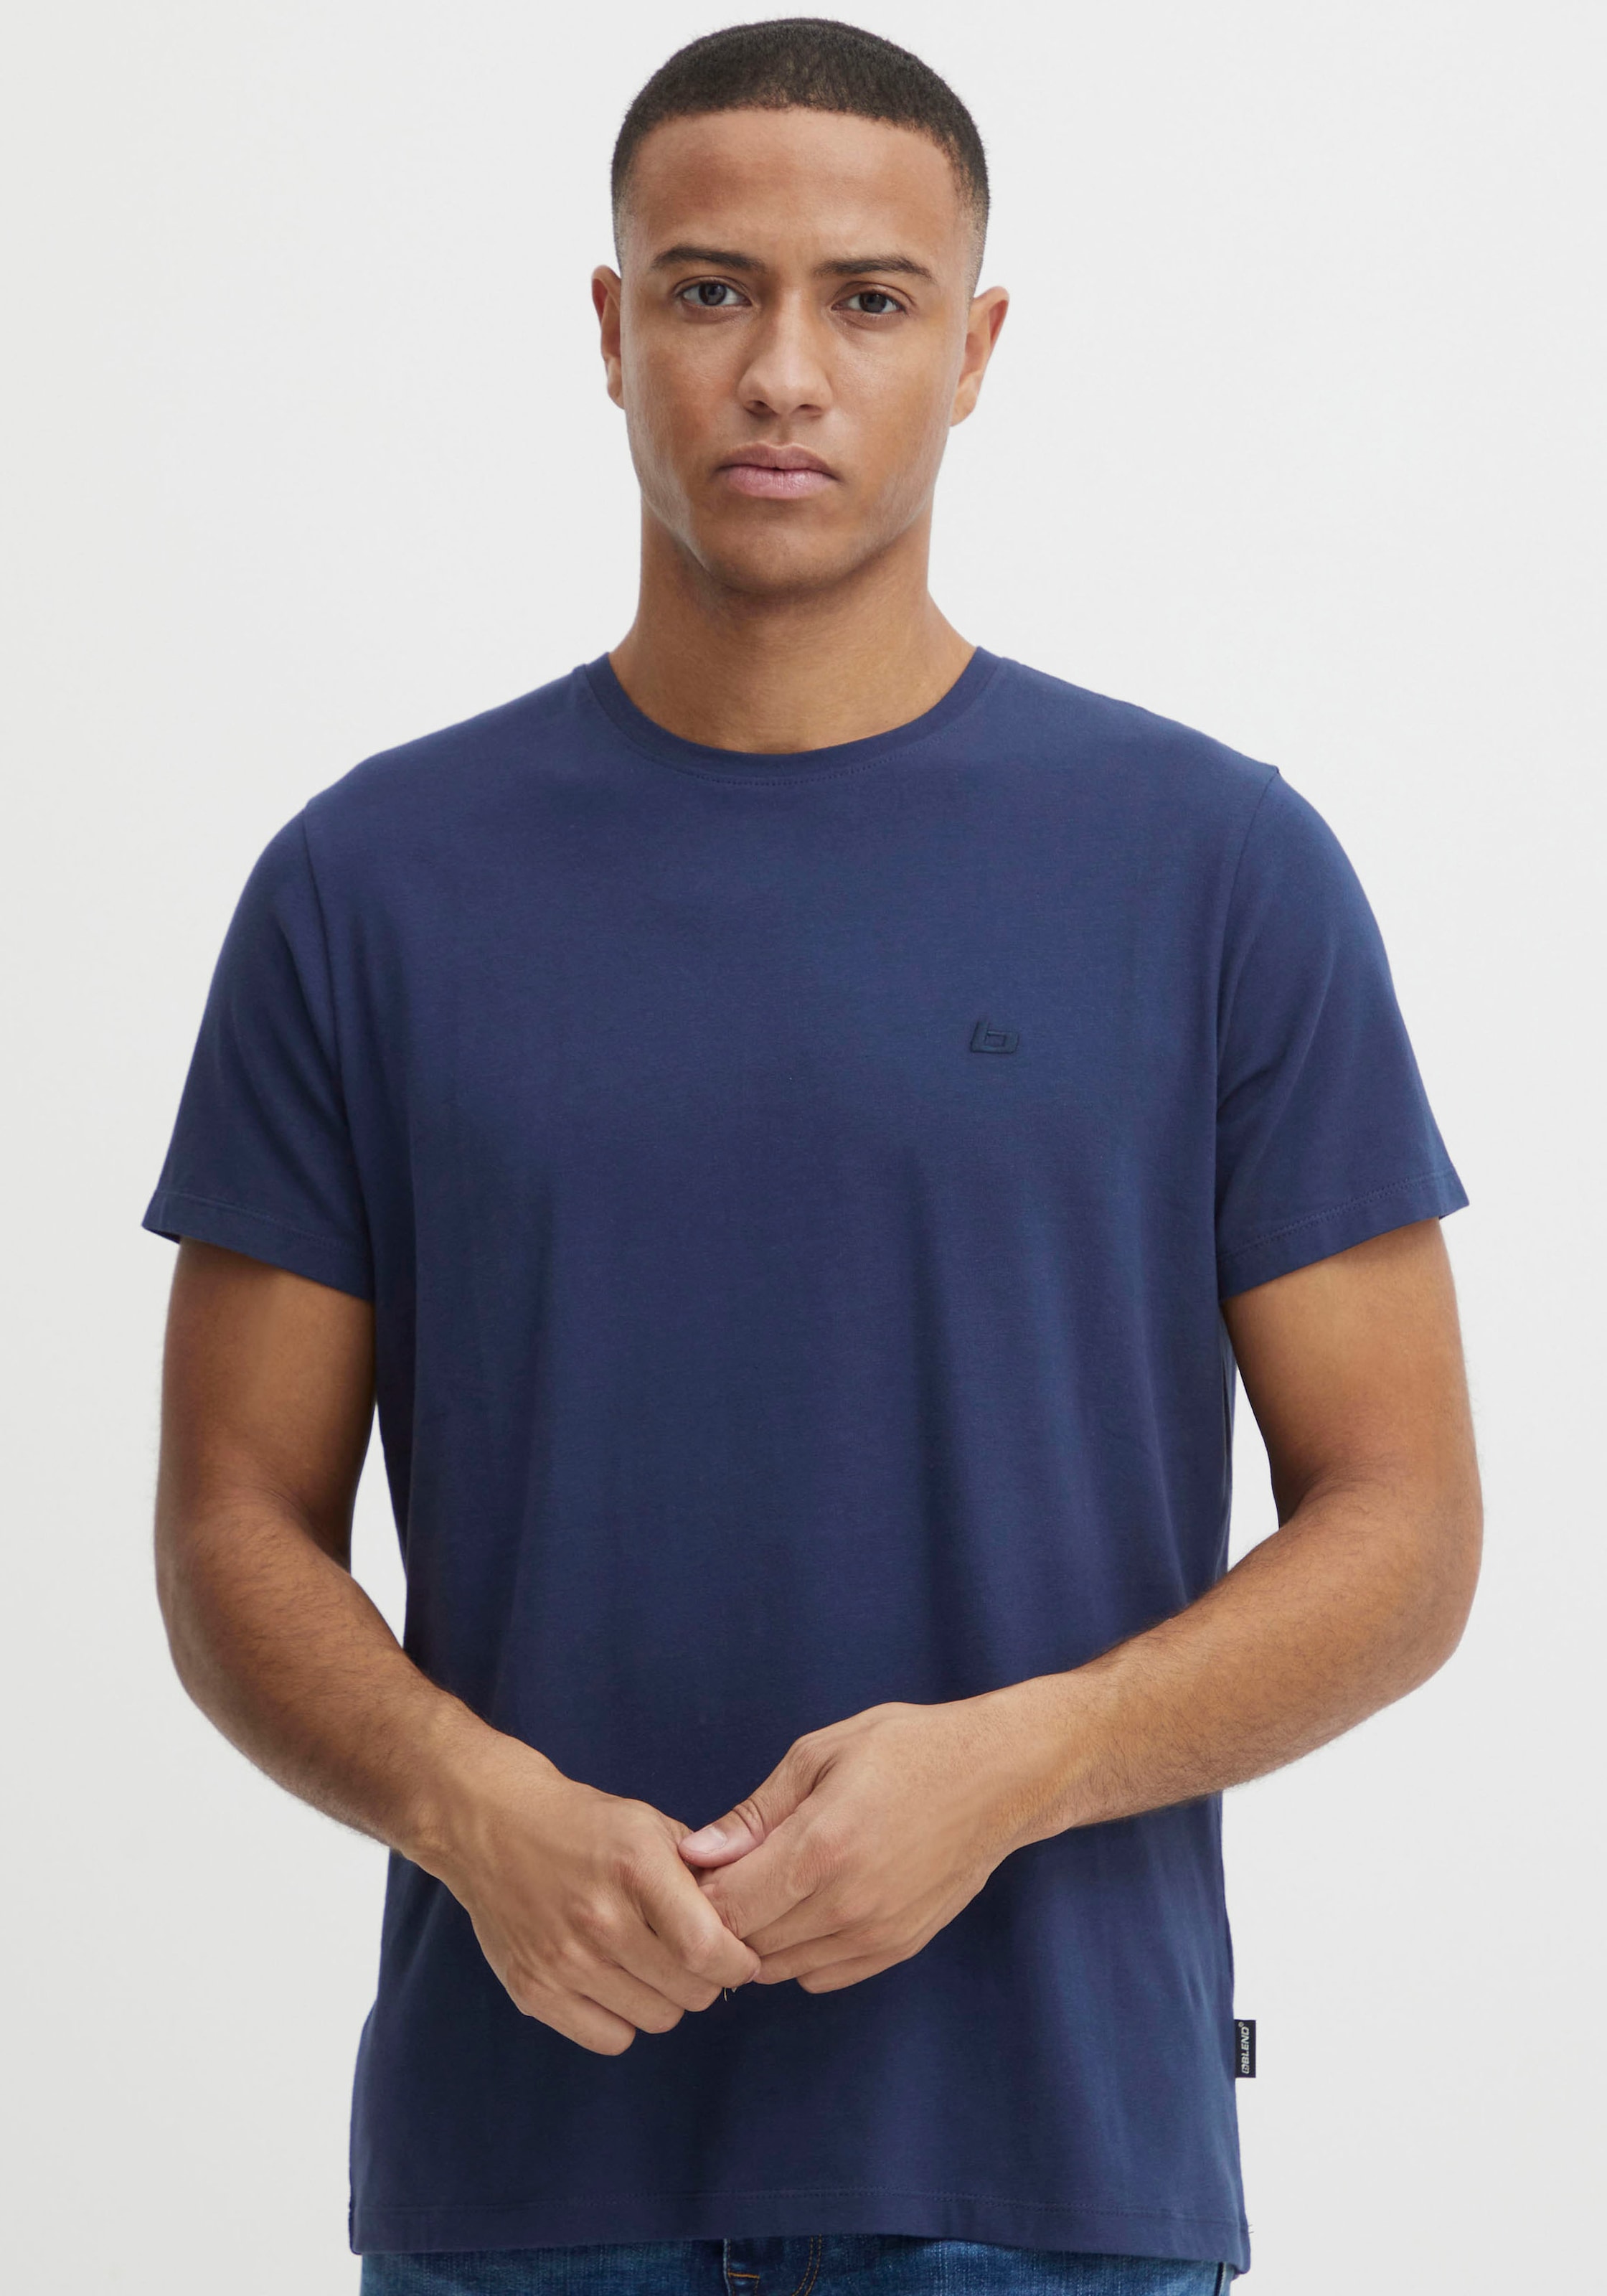 BHDinton Blend 2-in-1-Langarmshirt kaufen »BL T-shirt online crew«